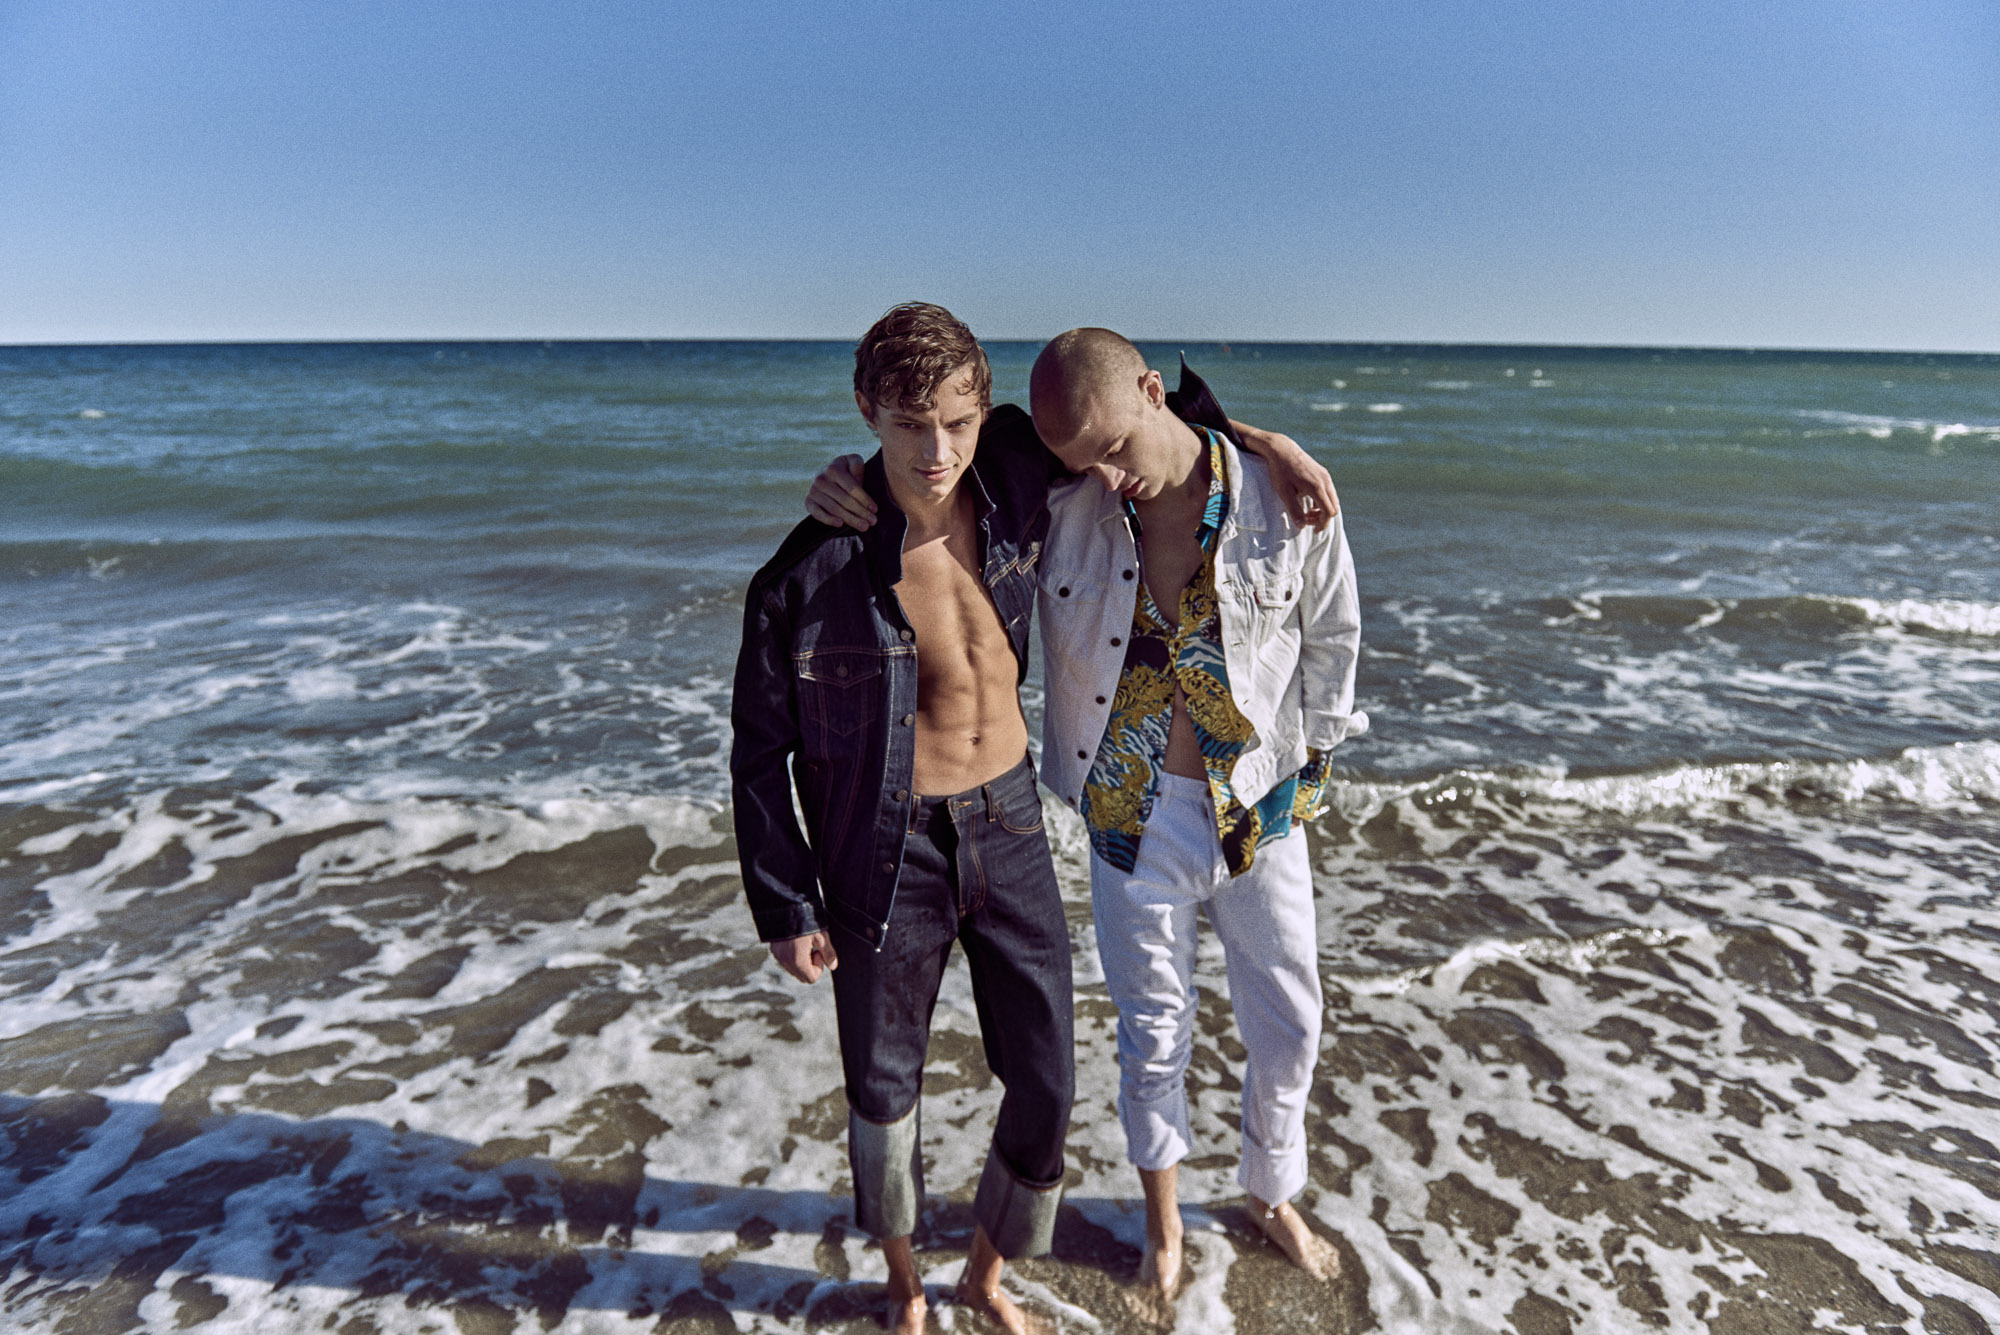 The boys on the beach : Kaltblut — MANUEL SCRIMA